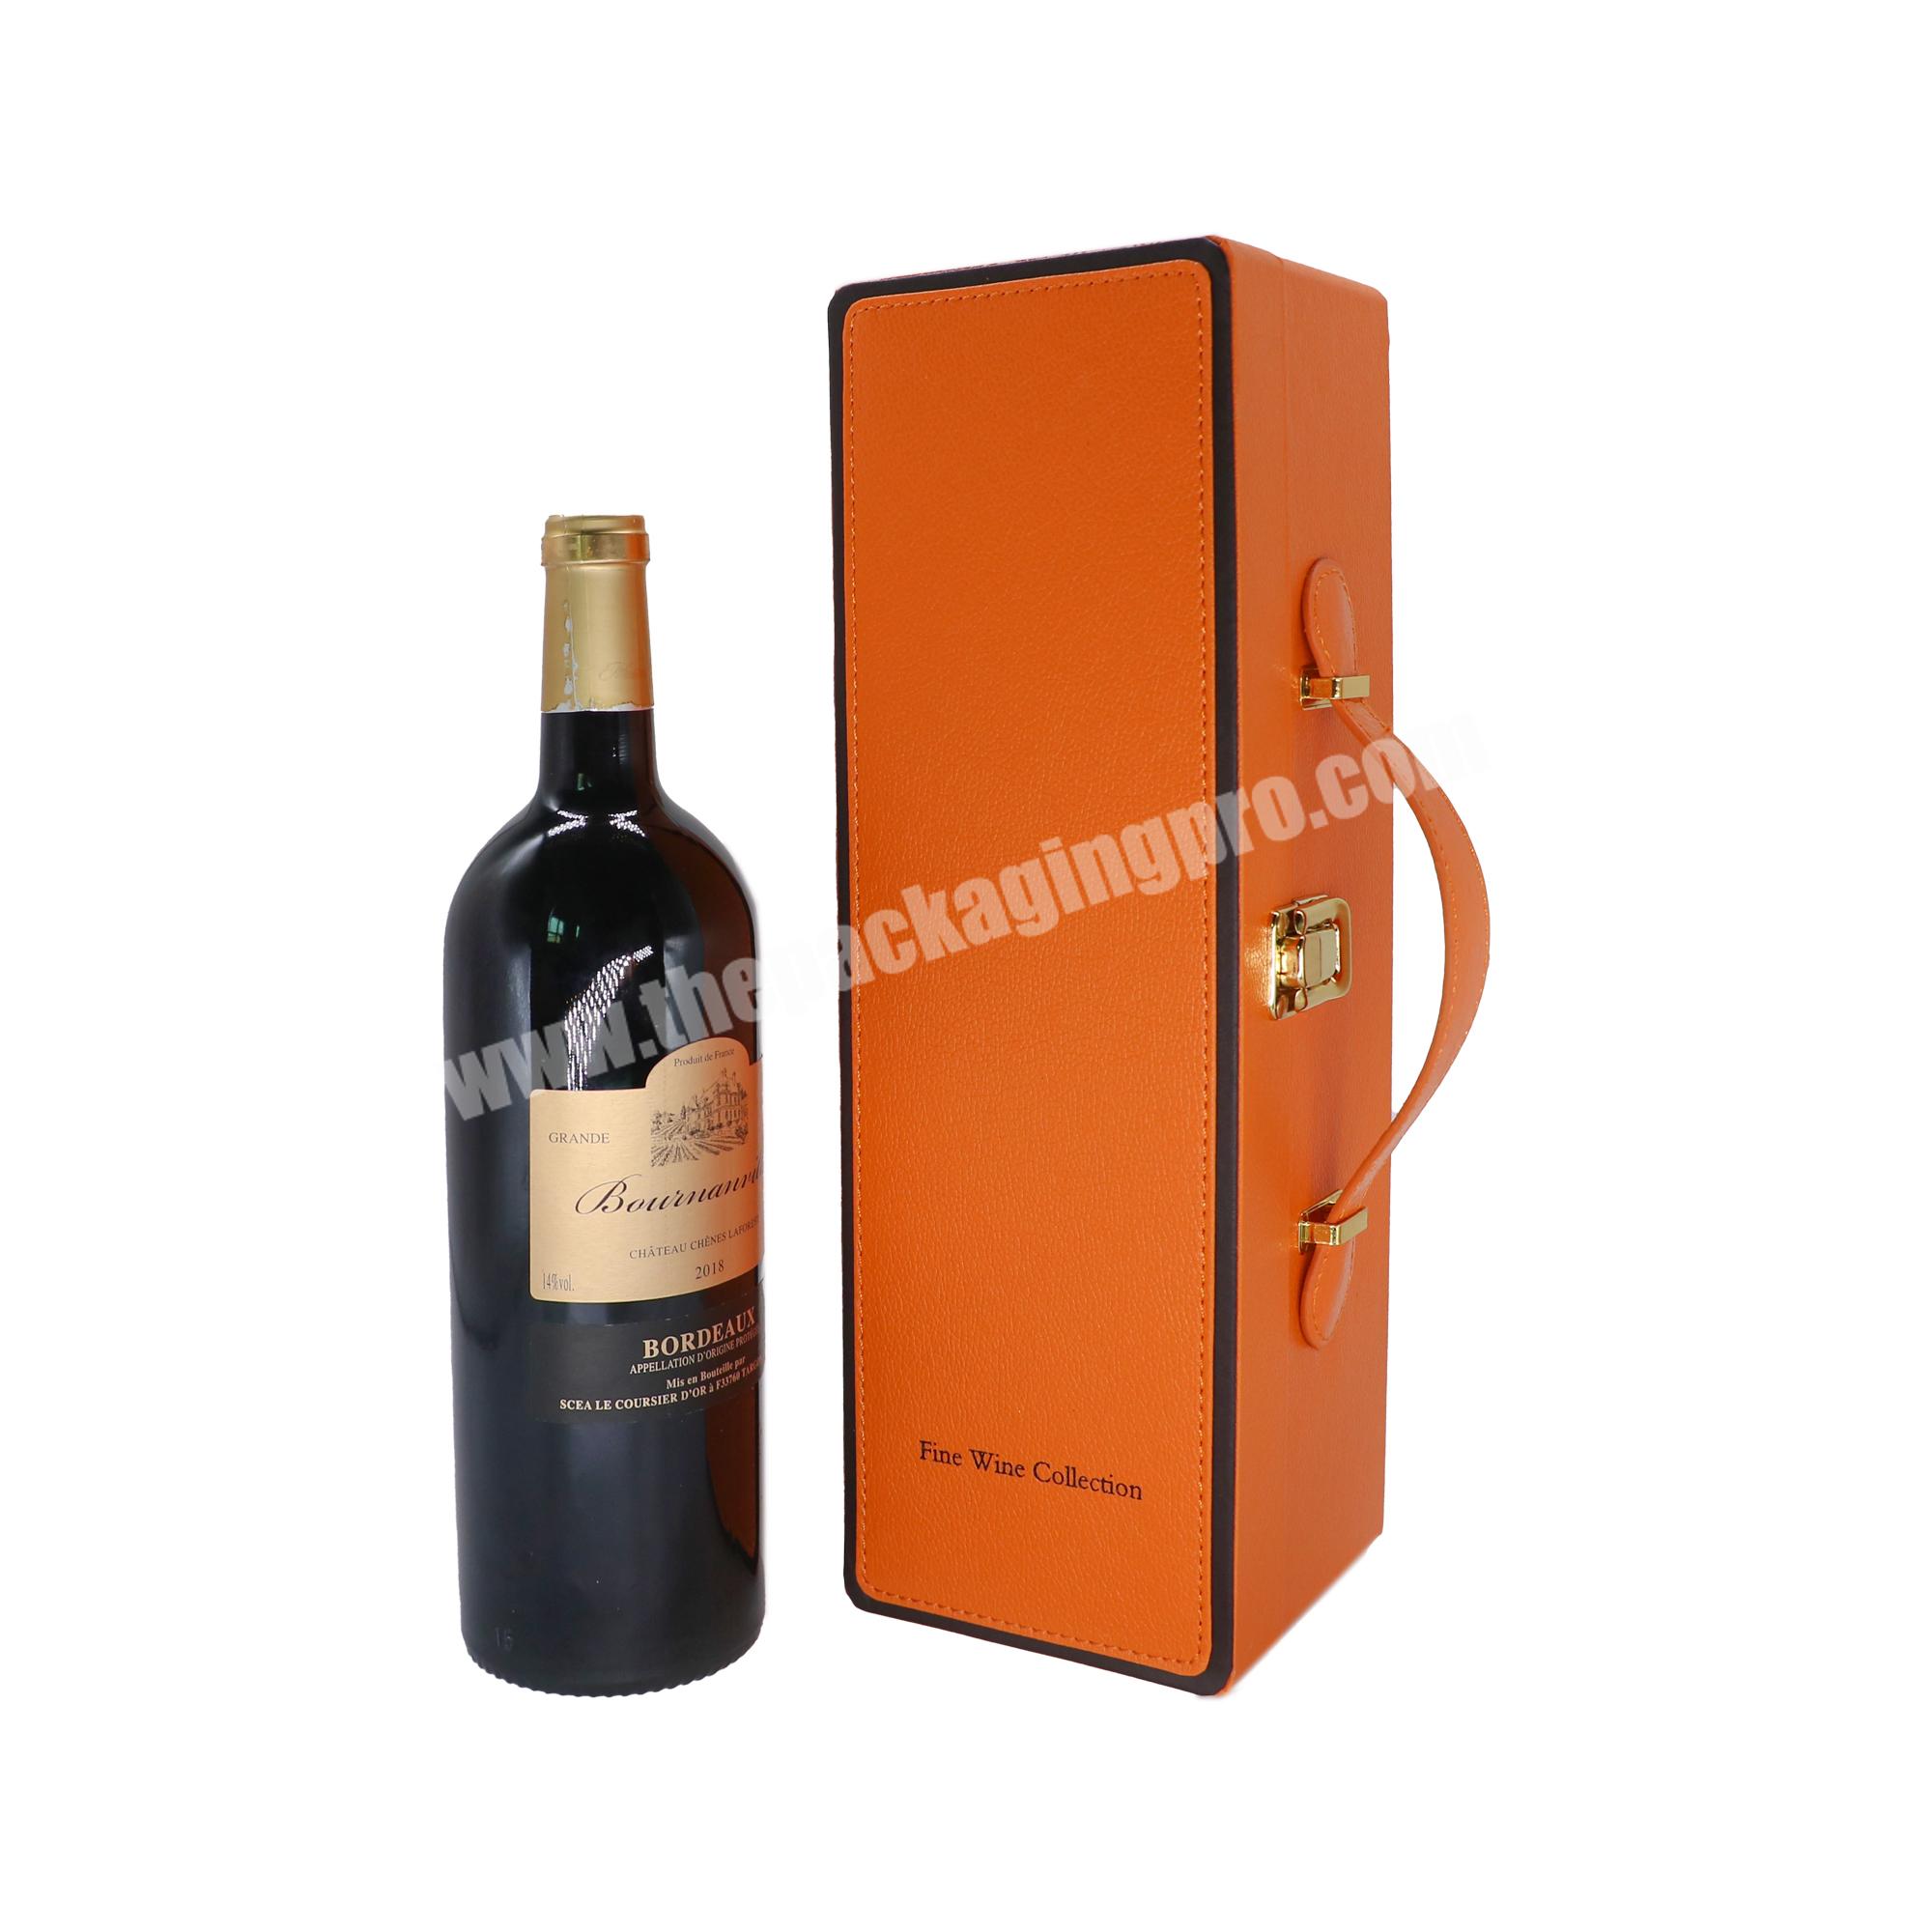 Custom wine leather box high quality premium wine box gift box for wine bottles